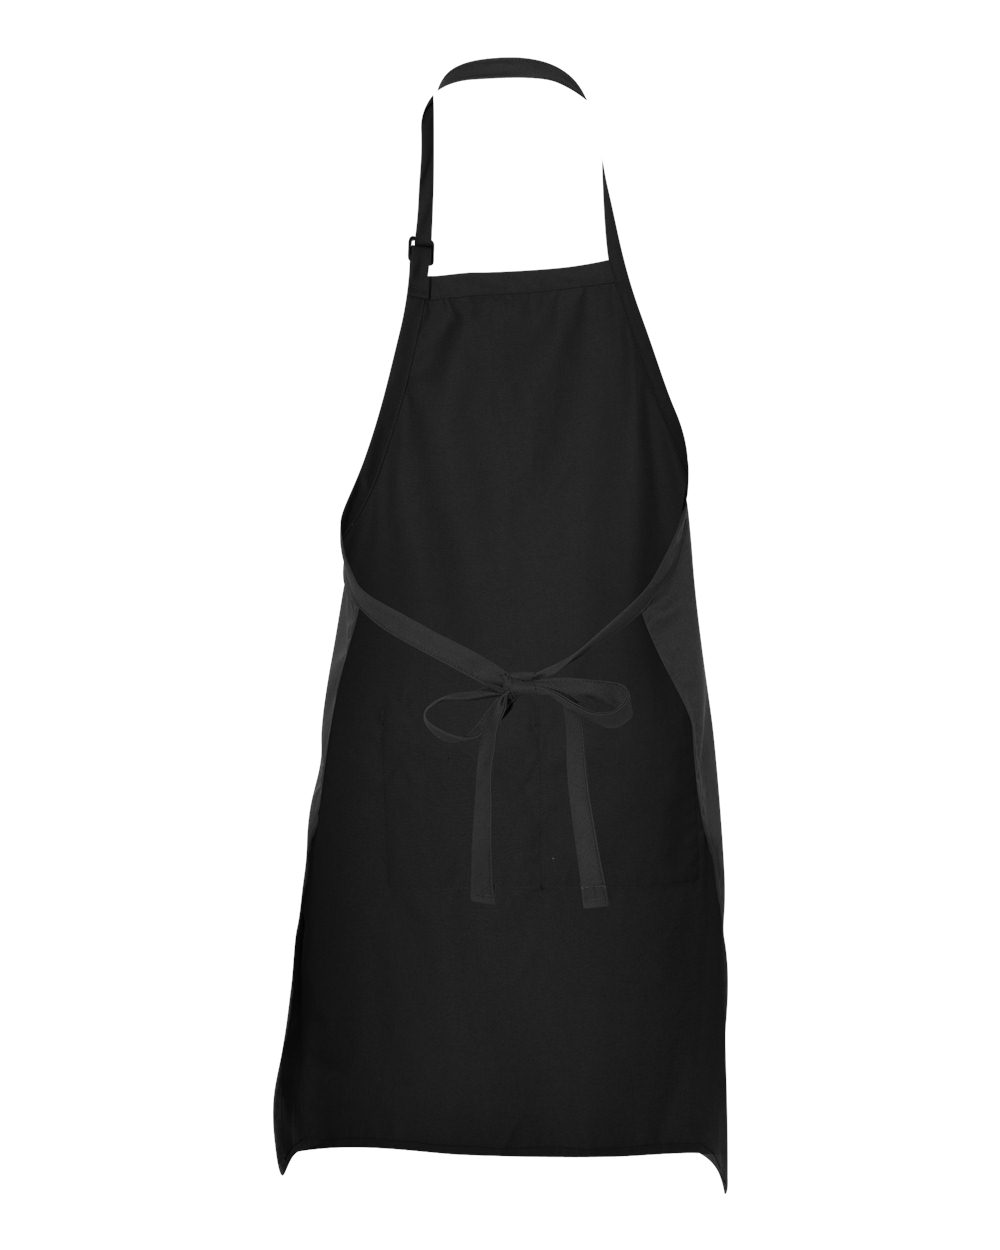 Chef Designs® Premium Bib Apron - Walmart.com